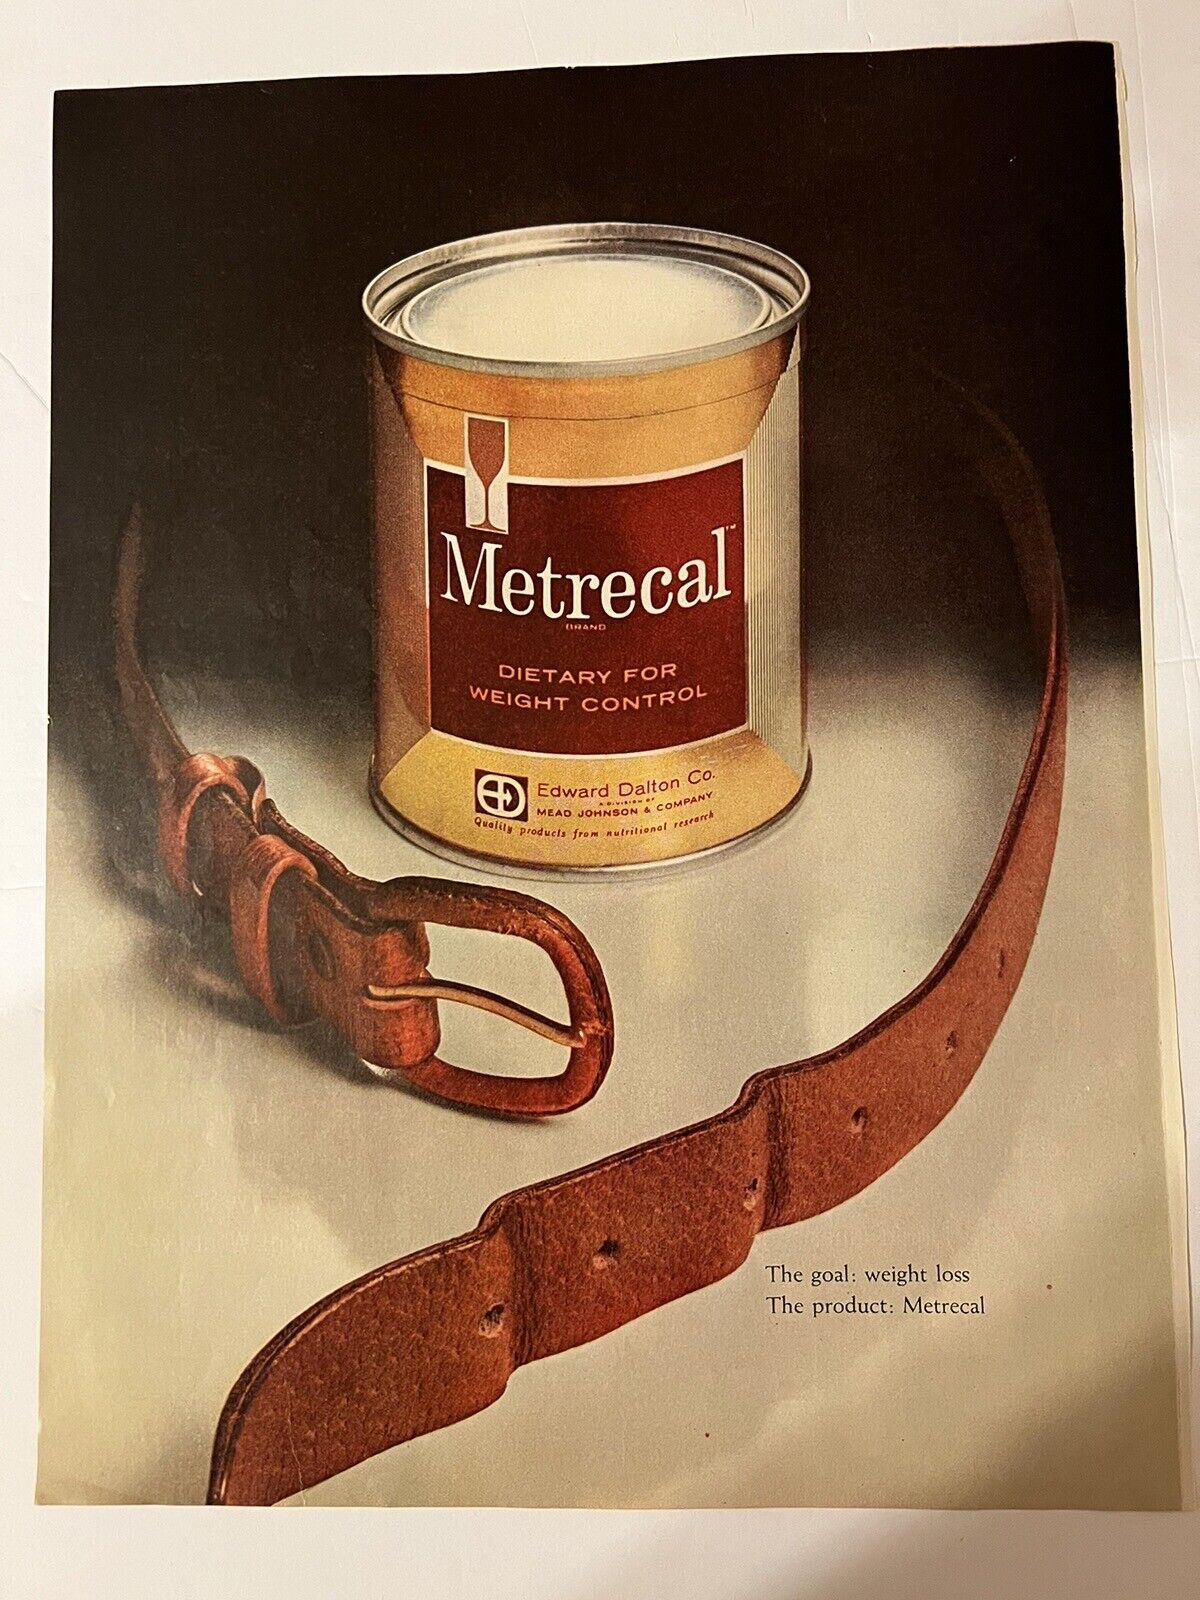 Vtg 1961 Metrecal Dietary for Weight Control Ad, Mead Johnson & Co, Ed Dalton